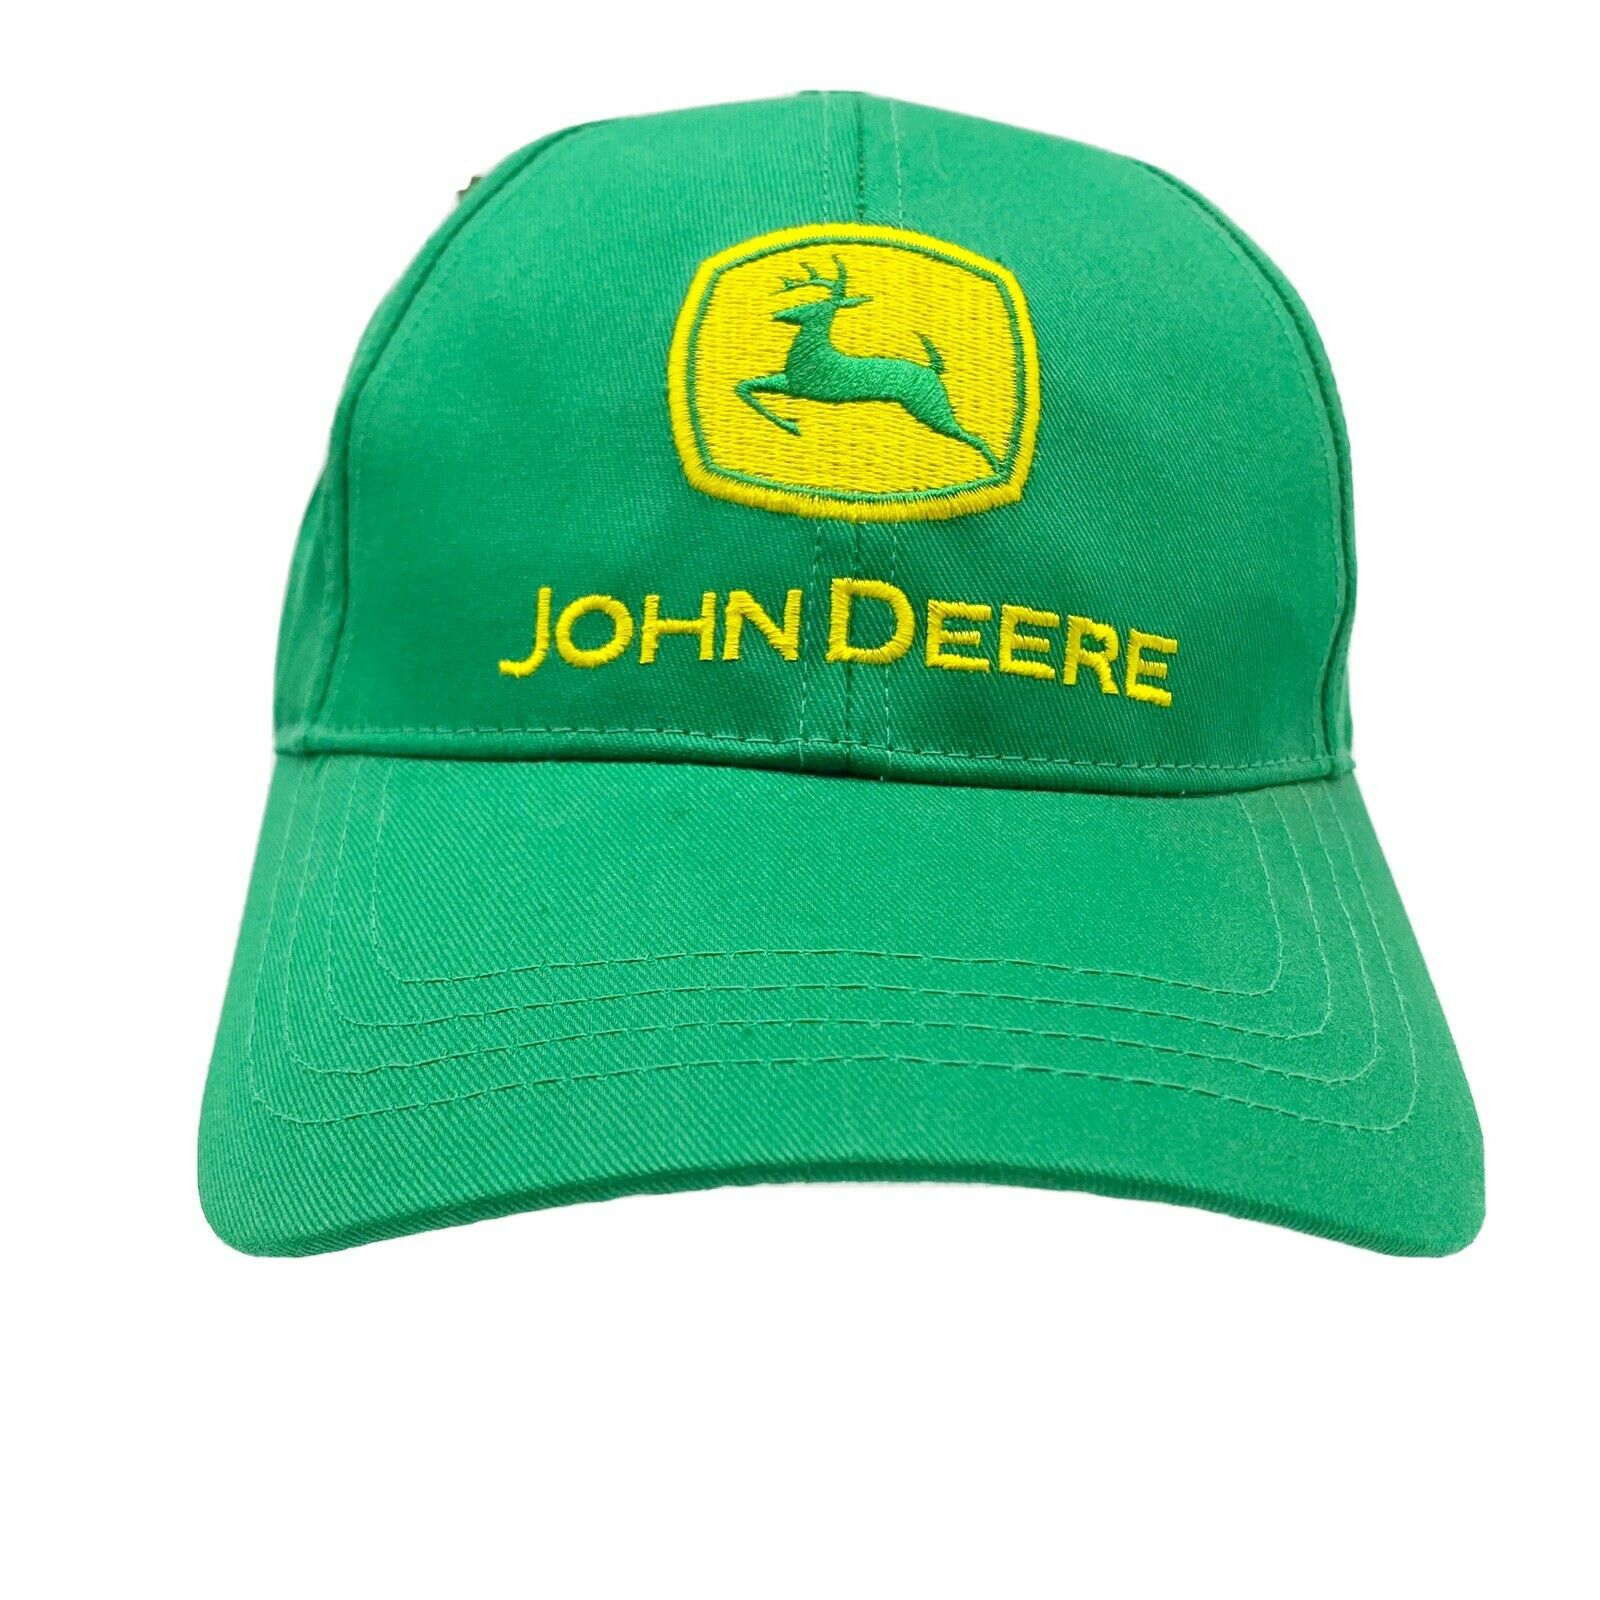 New John Deere Twill Adjustable Green Hat